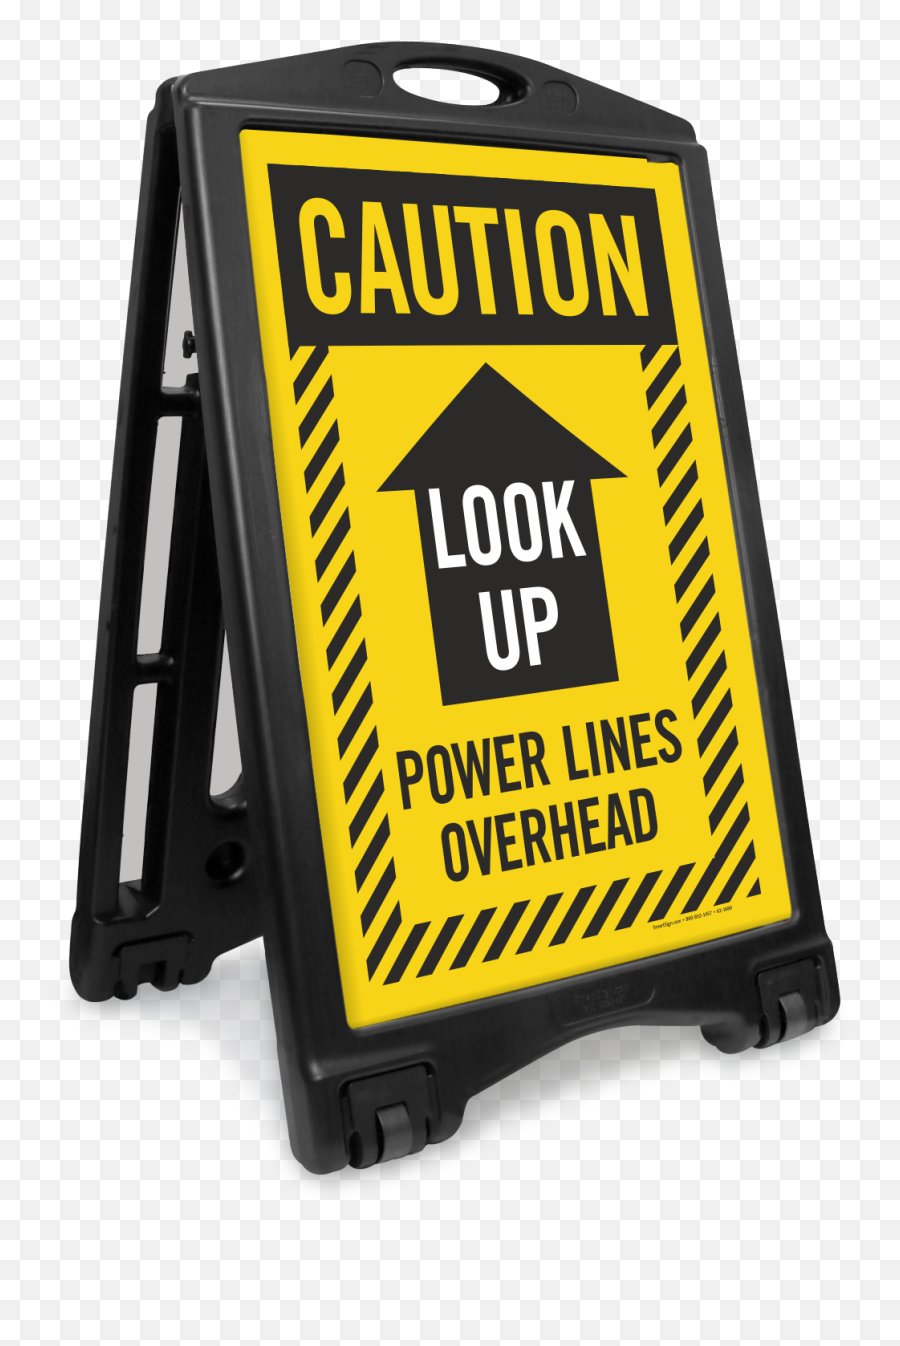 Caution Look Up Power Lines Overhead Sidewalk Sign Emoji,Power Lines Png